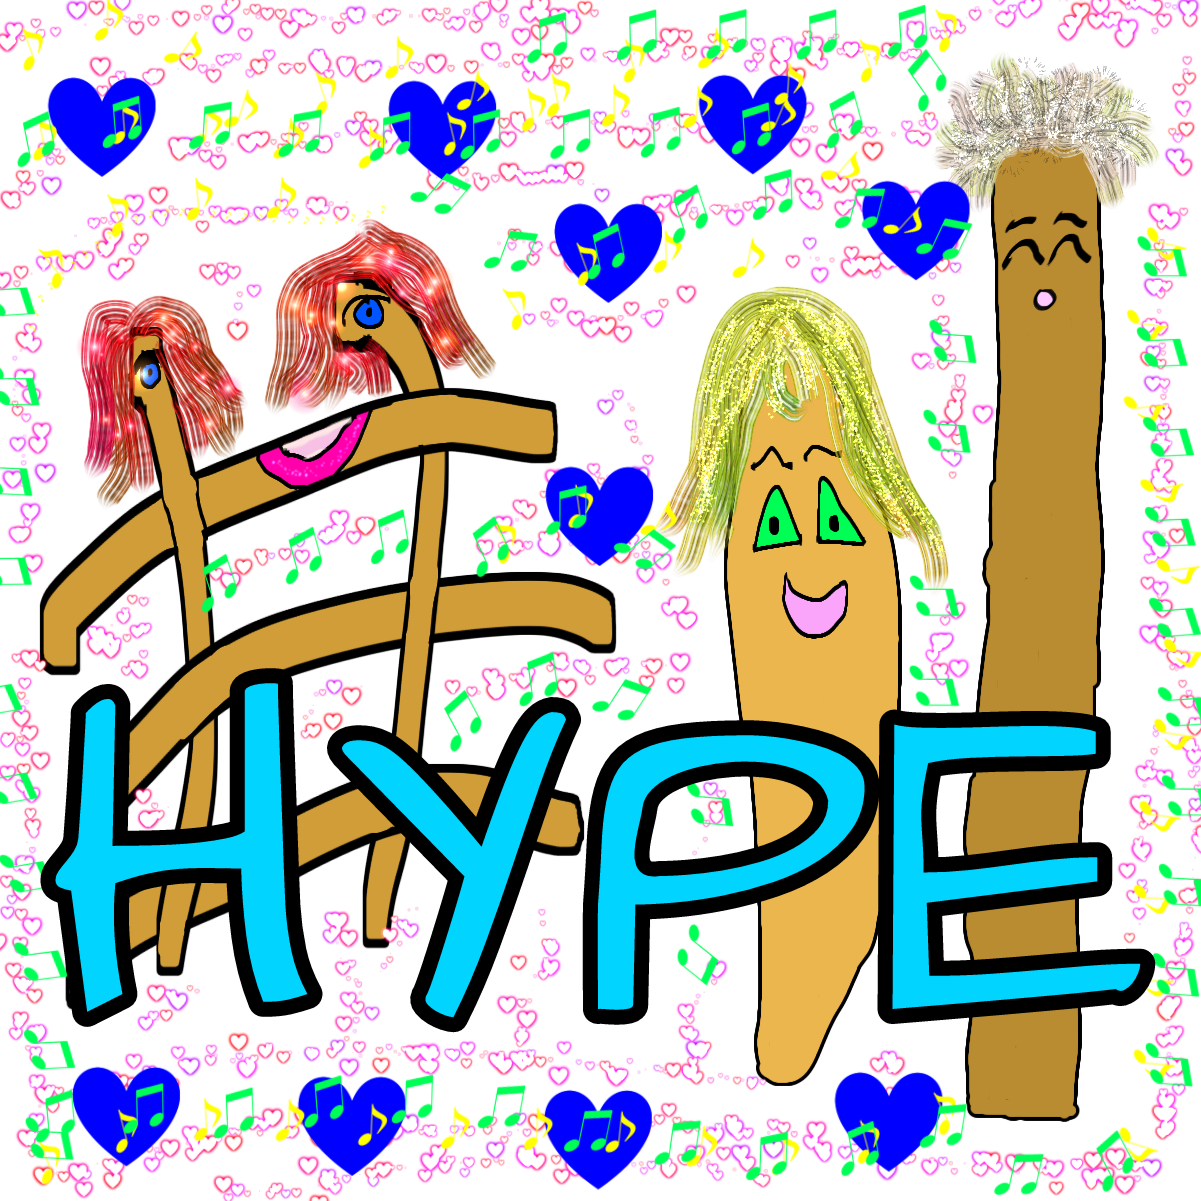 Hype Fries